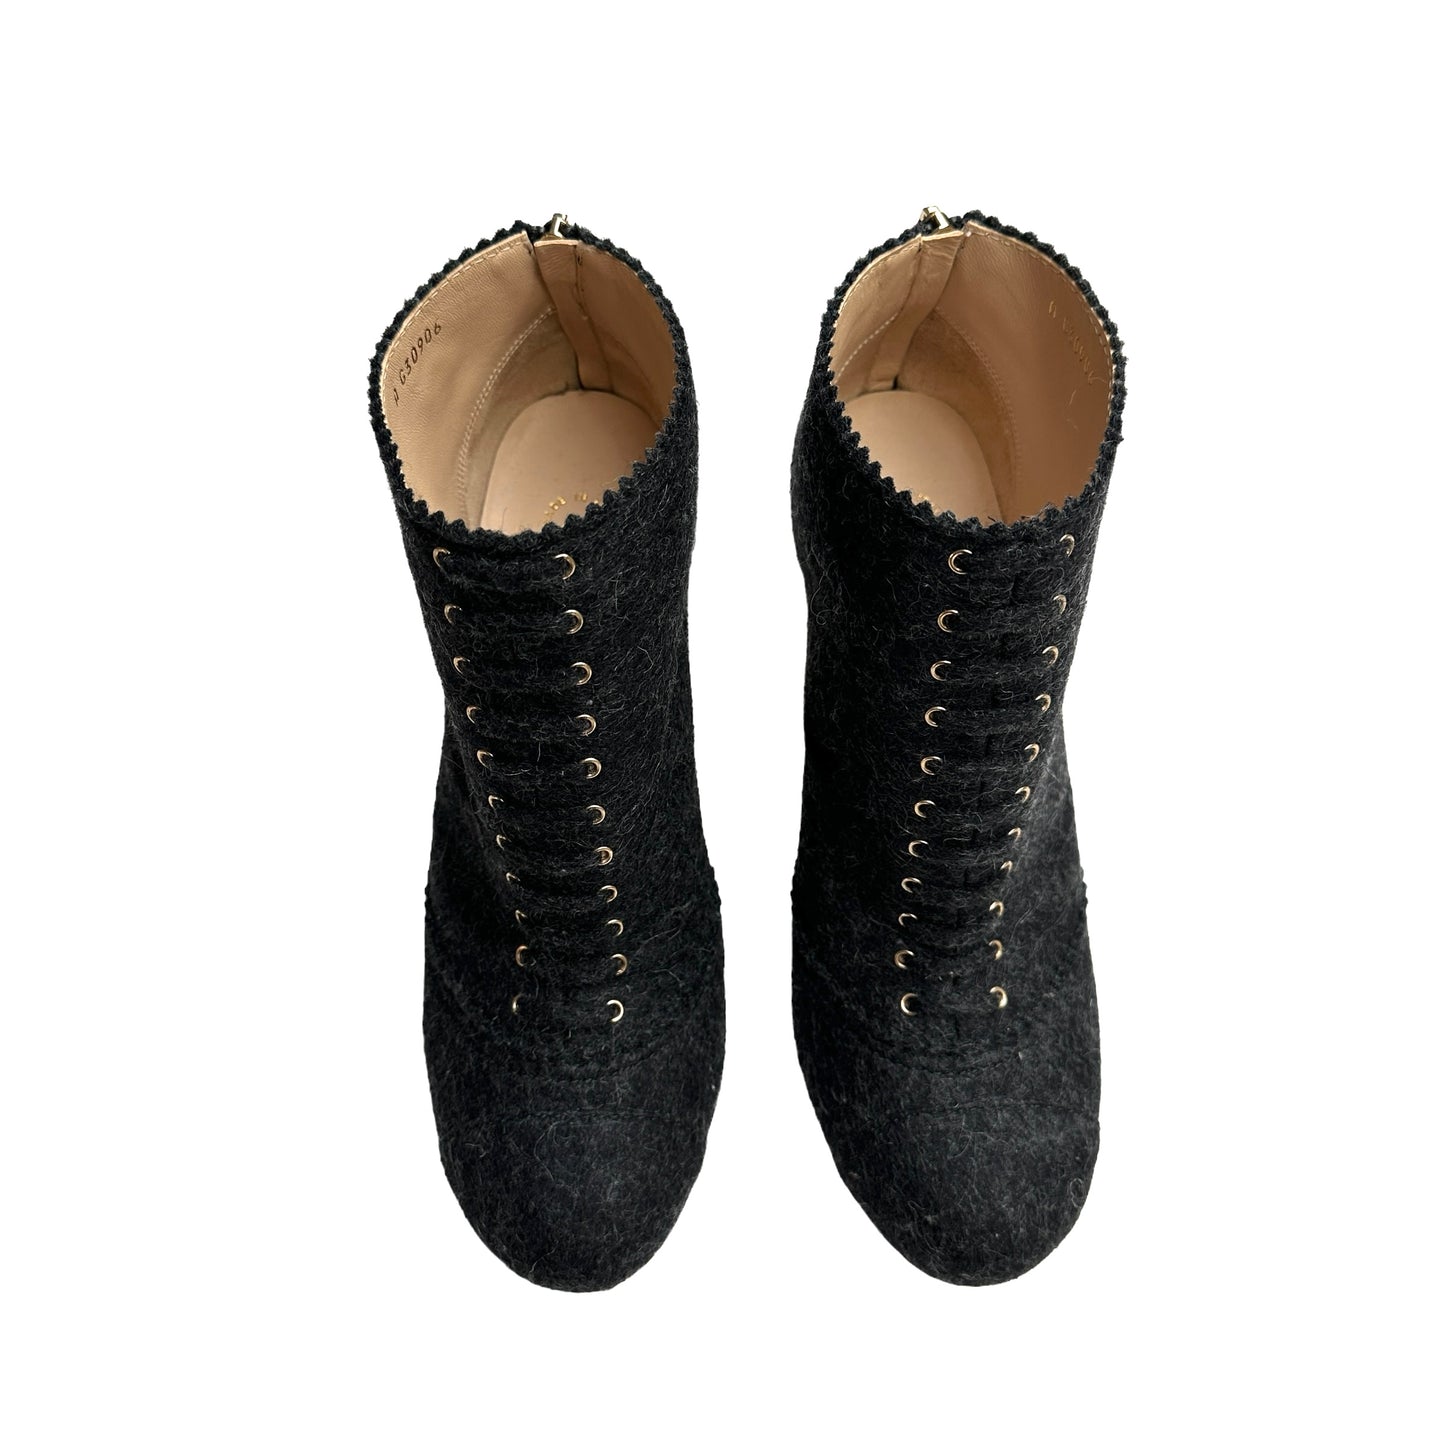 Grey Felt Boots w/Gold Heels - 10